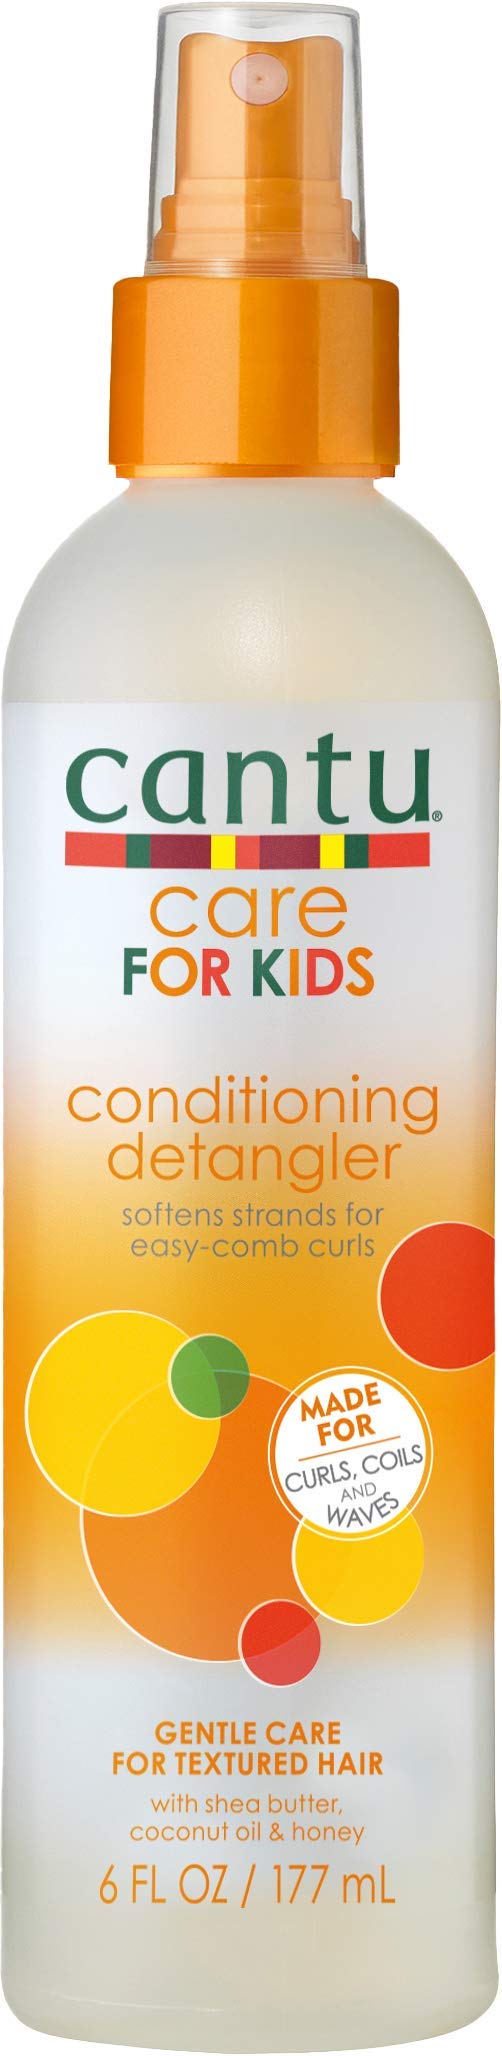 Cantu Care for Kids Conditioning Detangler, 6 Fl Oz